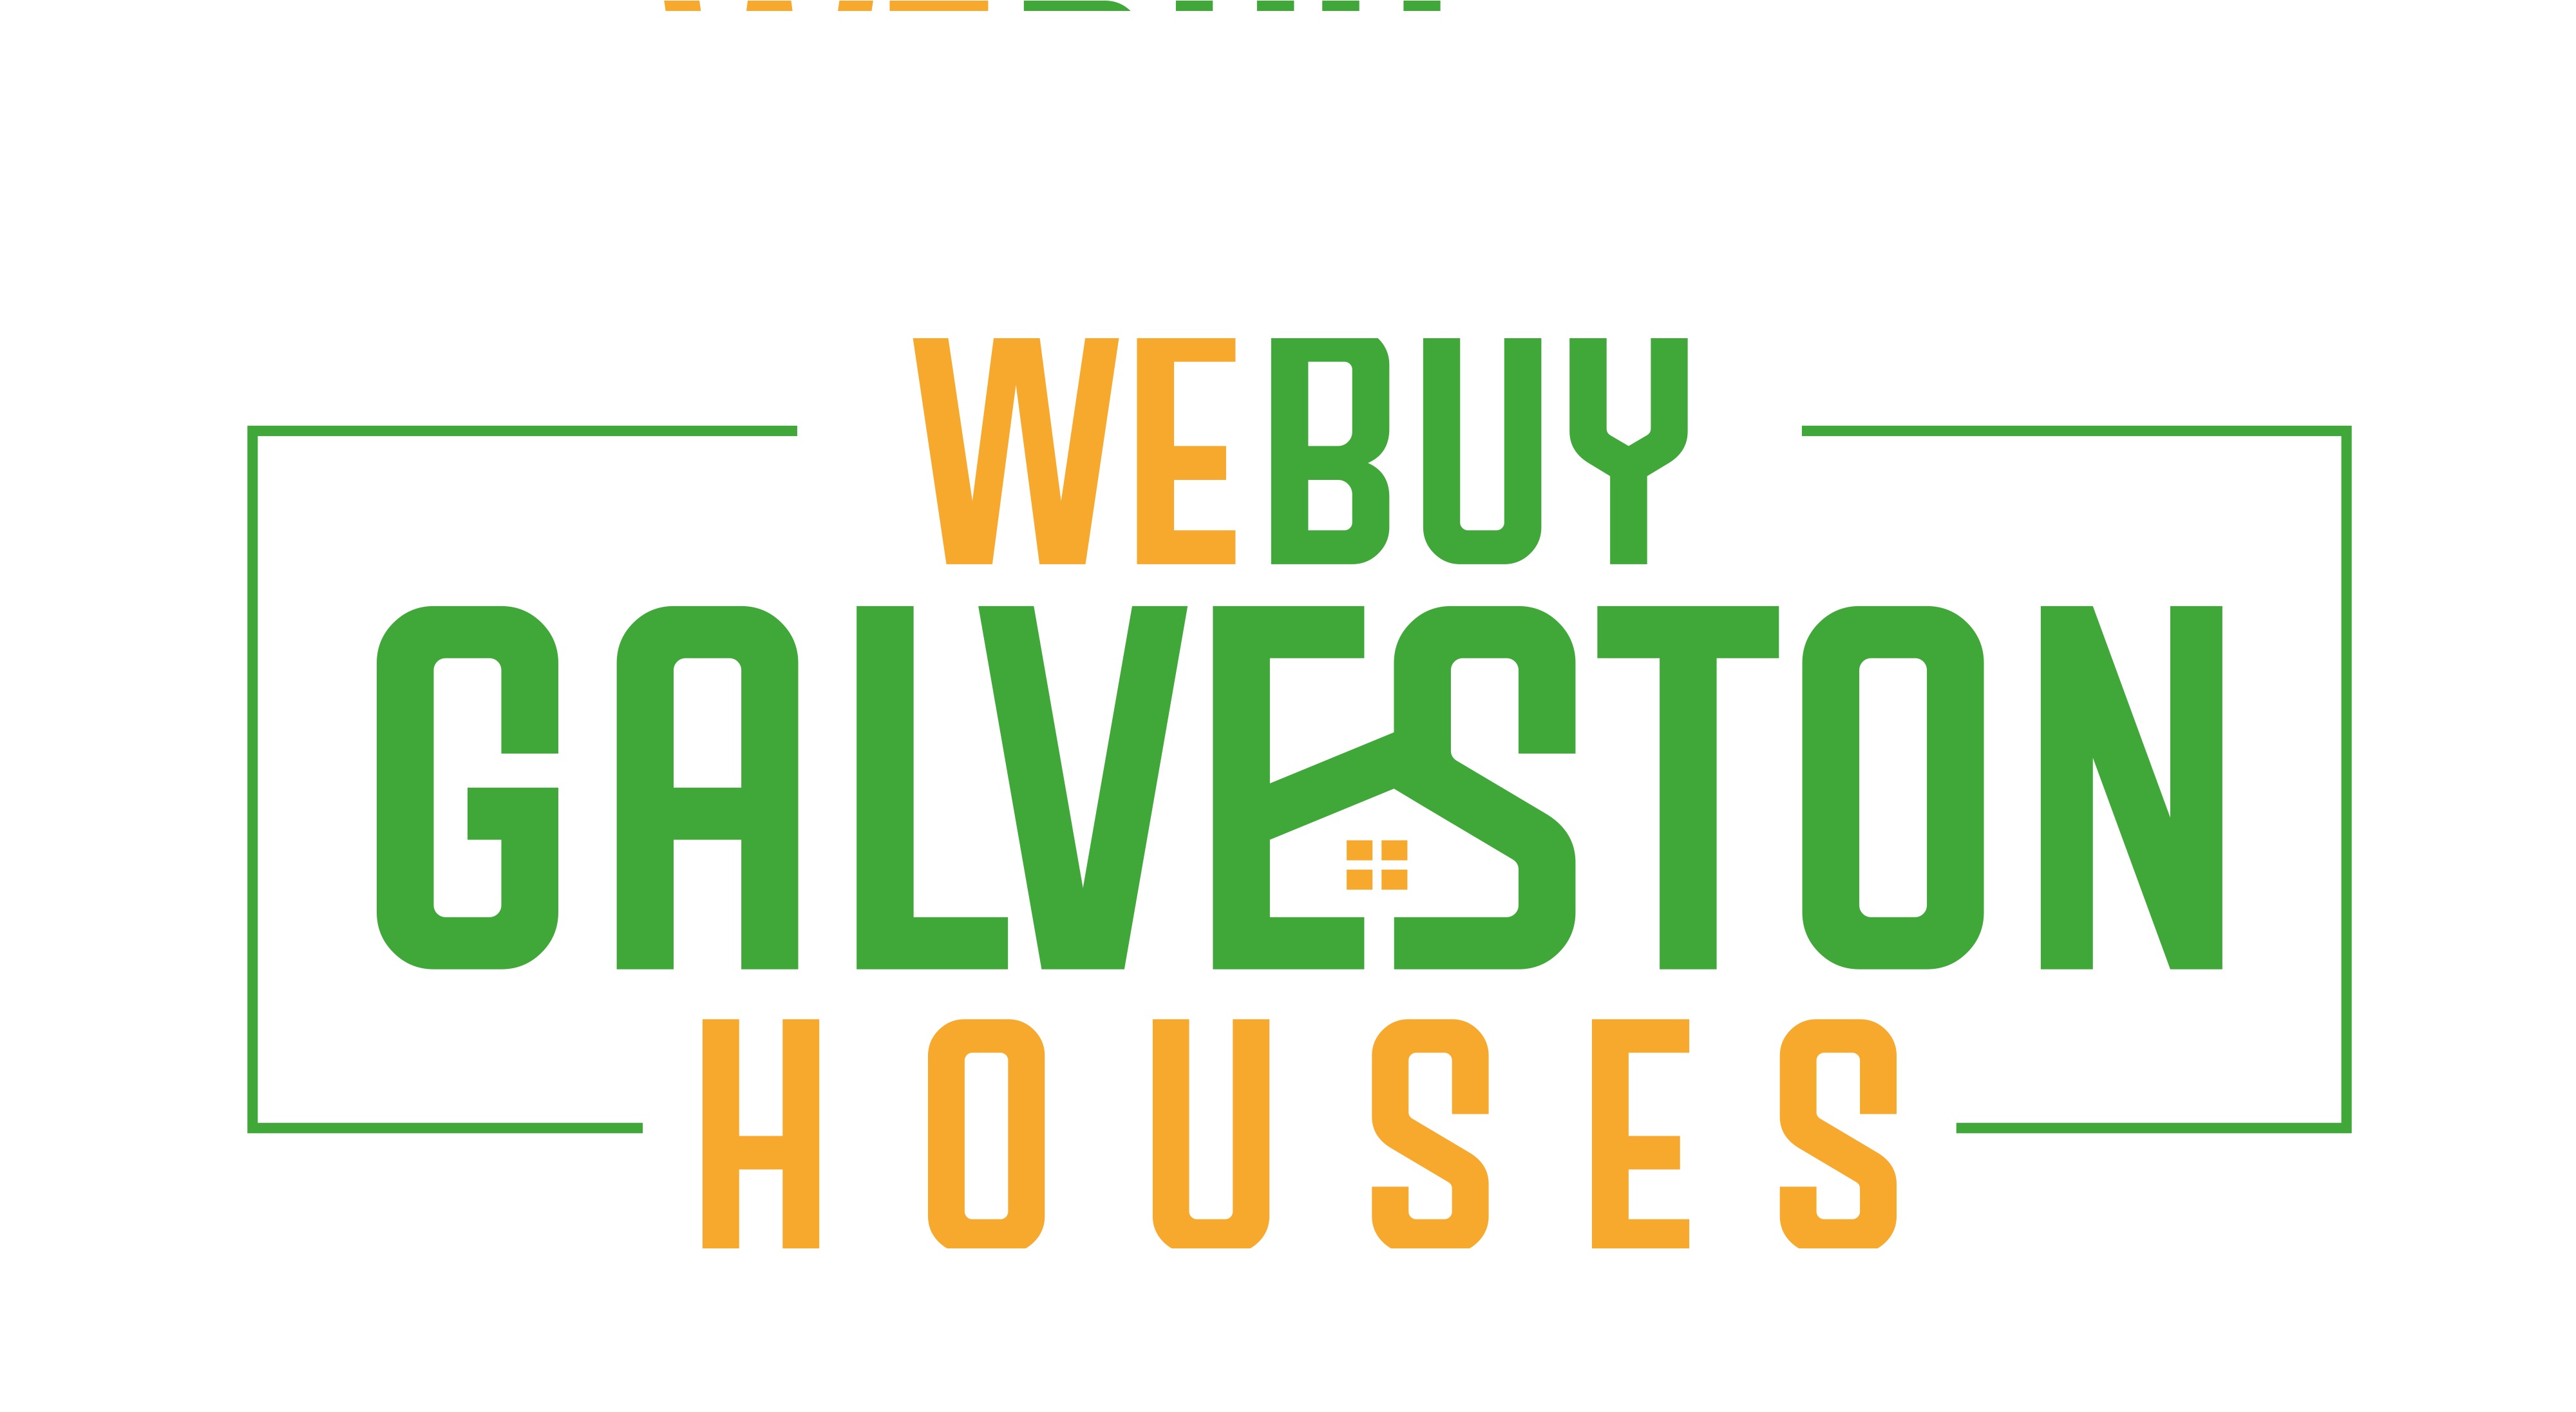 We Buy Galveston Houses